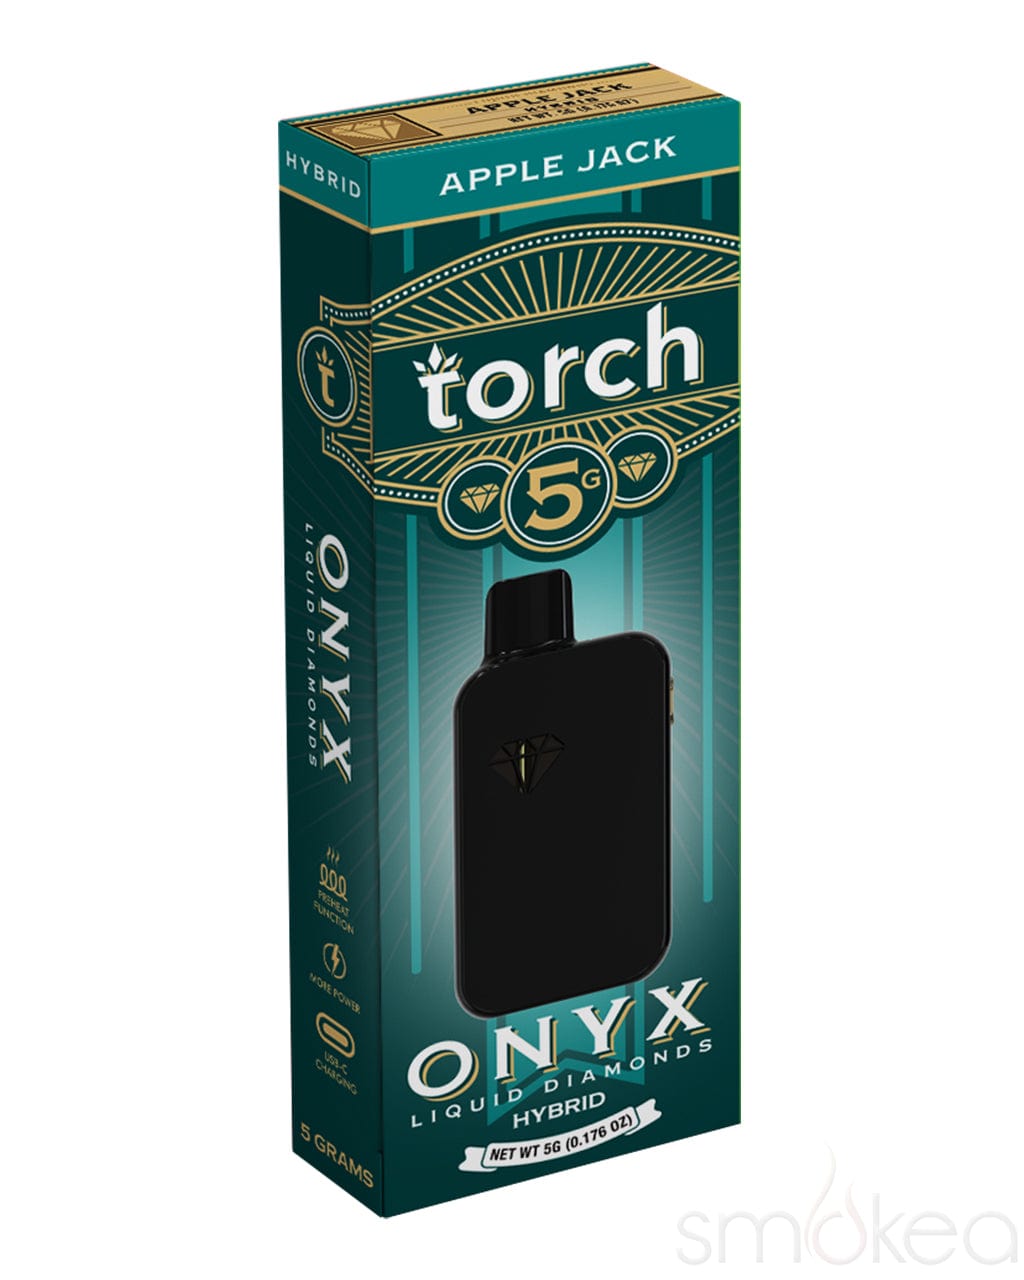 Torch 5g Onyx THCA Liquid Diamonds Vape - Apple Jack